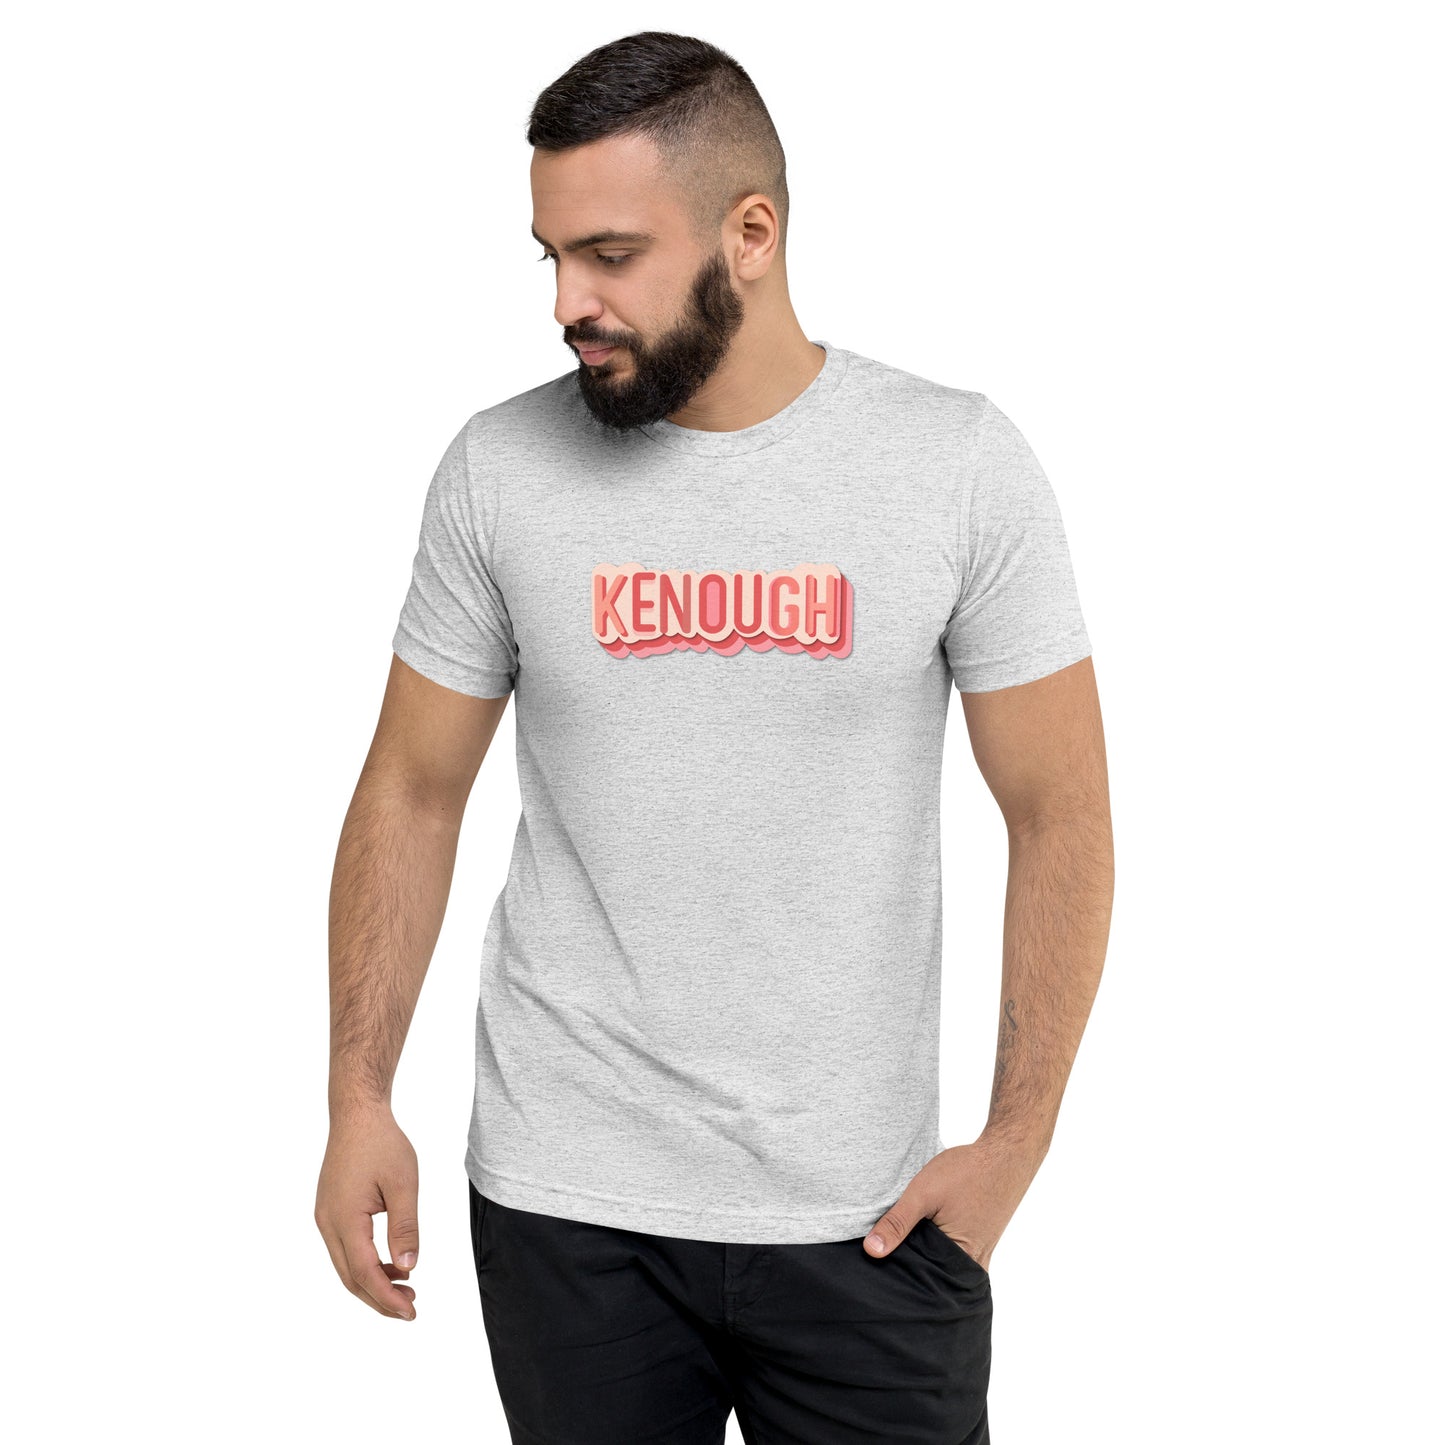 KENOUGH - Short sleeve t-shirt